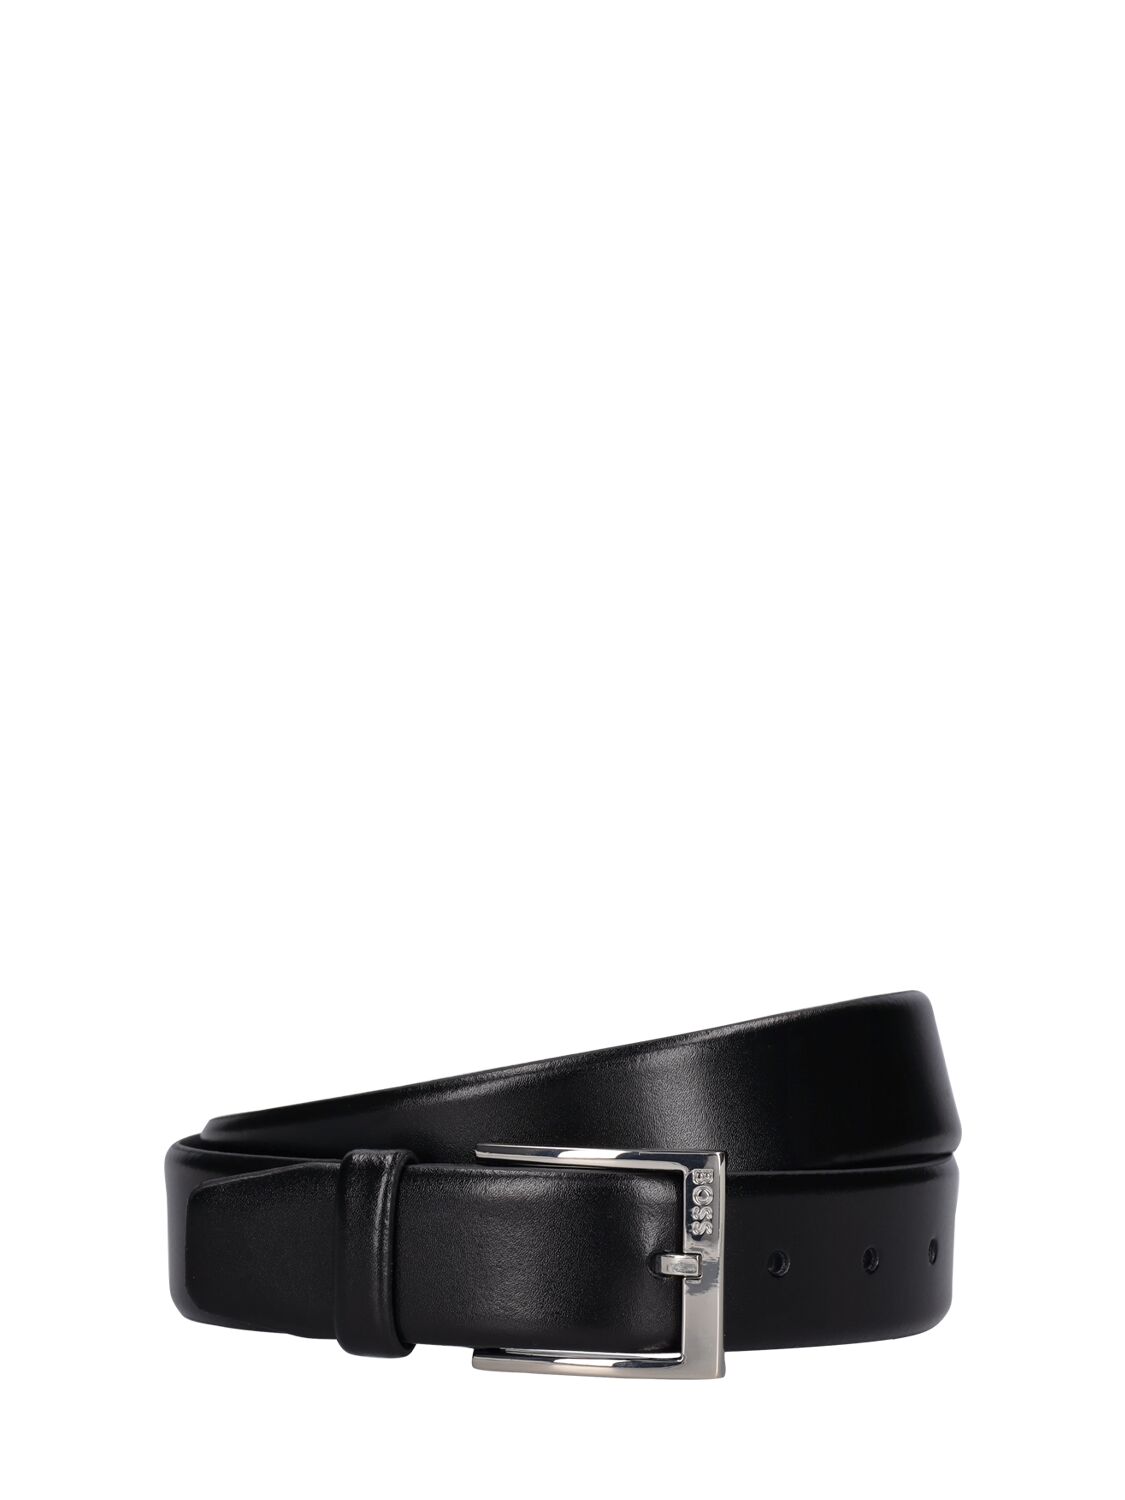 Image of Elloy Leather Belt